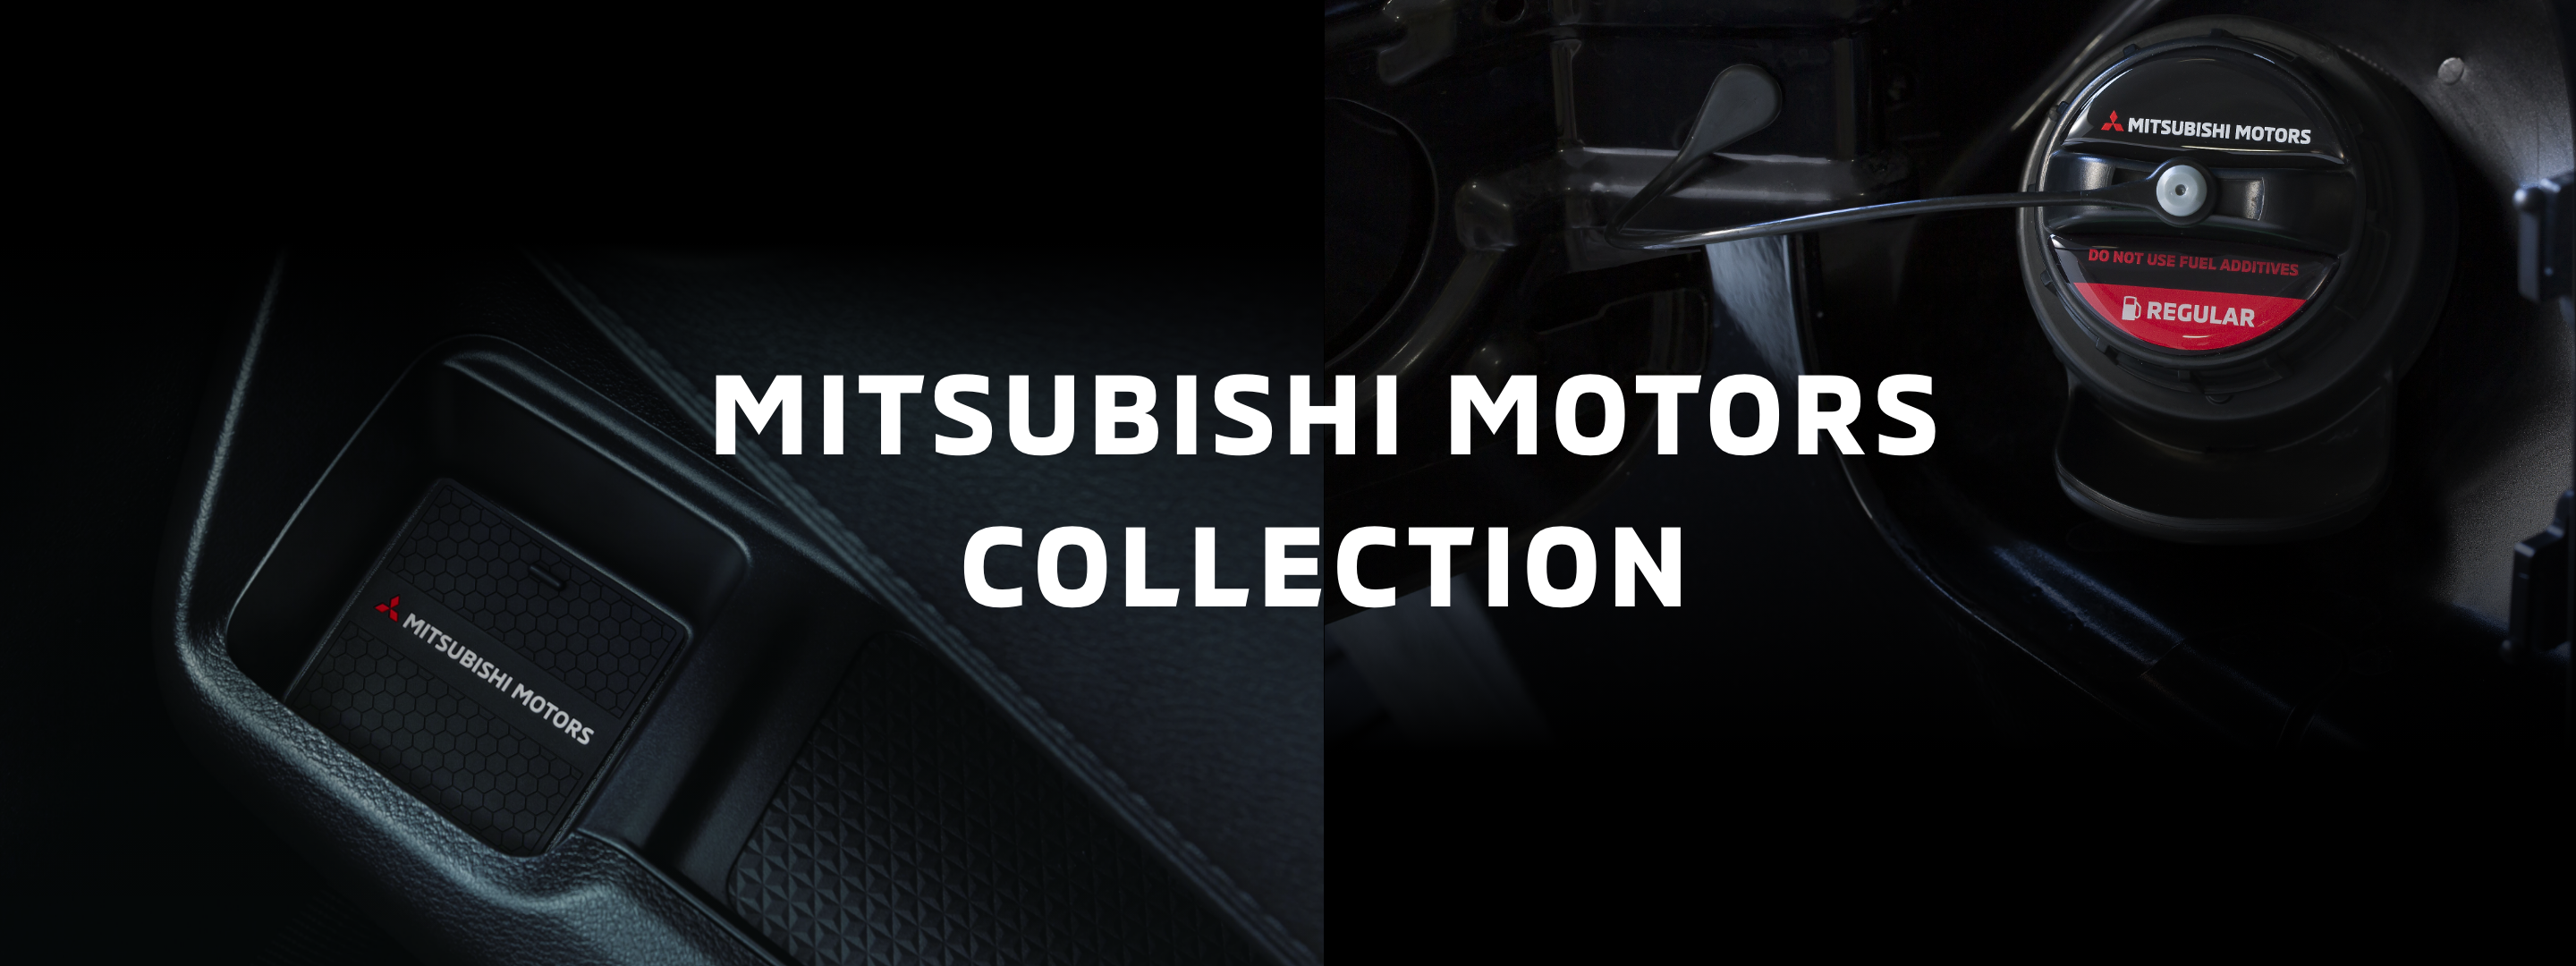 MITSUBISHI MOTORS COLLECTION – MITSUBISHI MOTORS ONLINE SHOP